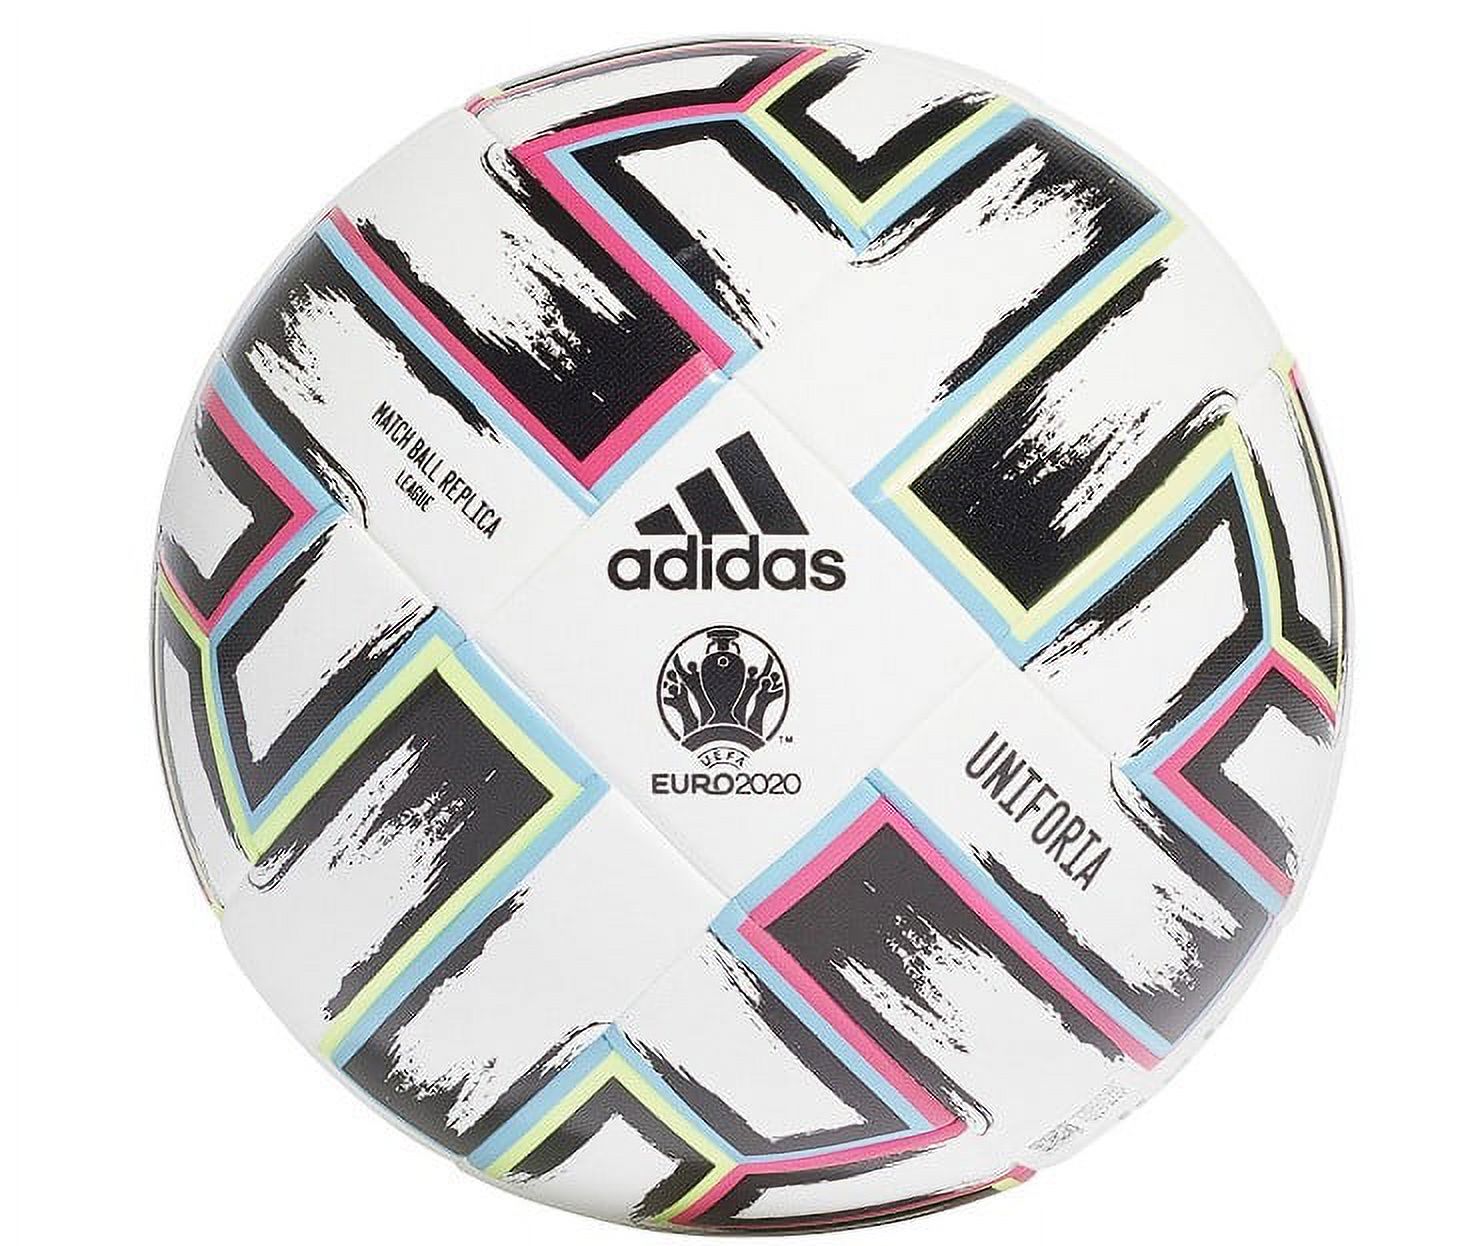 Adidas 2020 Uniforia League Soccer Ball - image 1 of 2